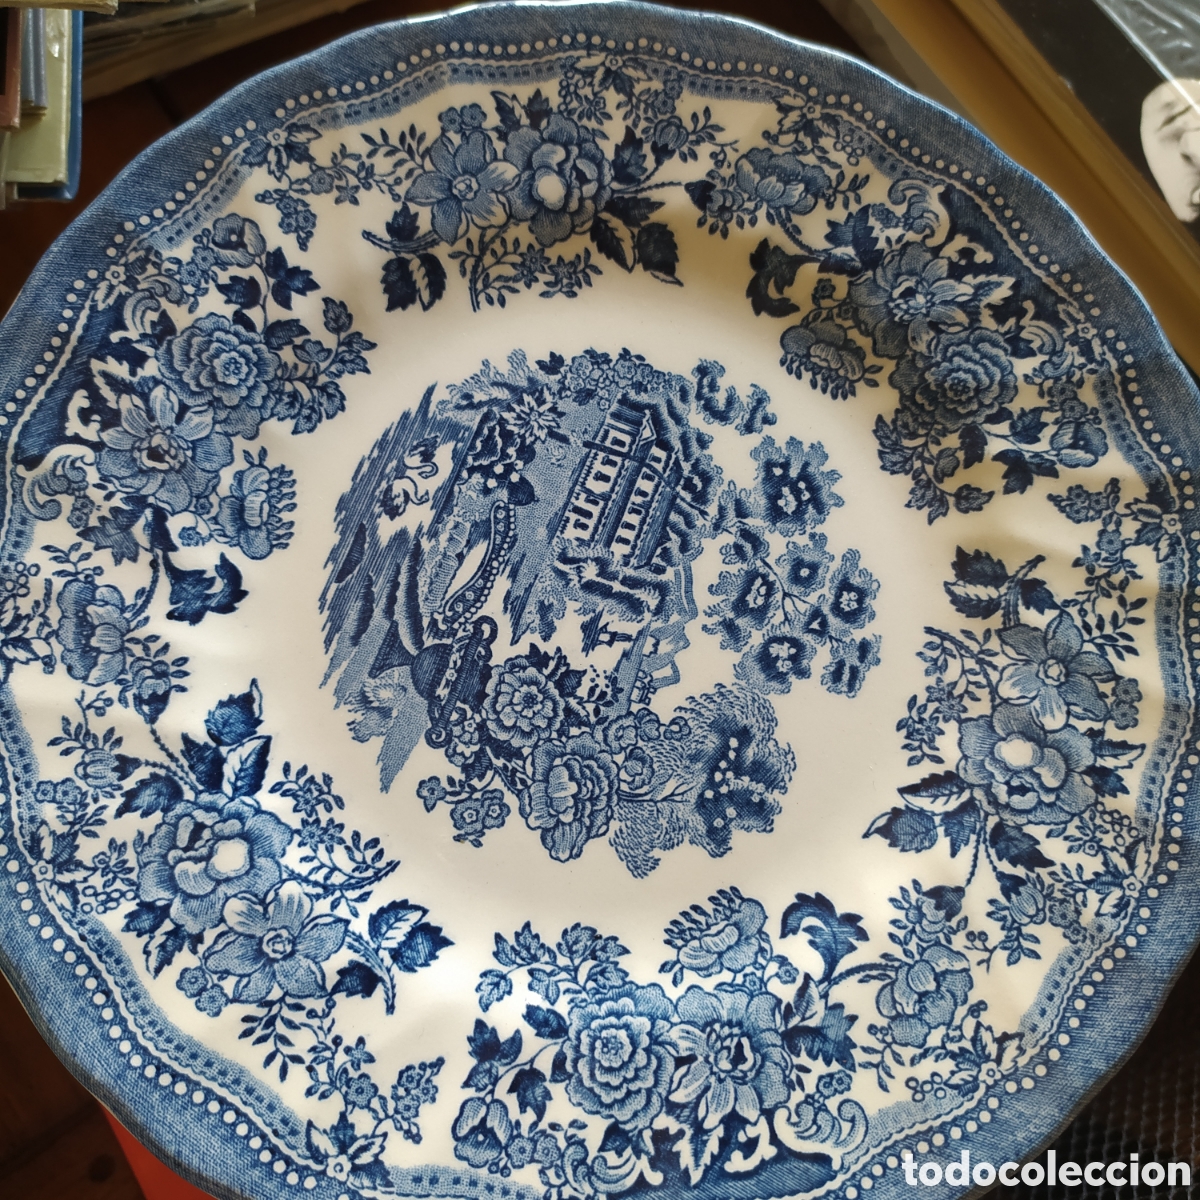 vajilla inglesa churchill. 16 platos de tres ta - Buy Antique english  porcelain and ceramics on todocoleccion